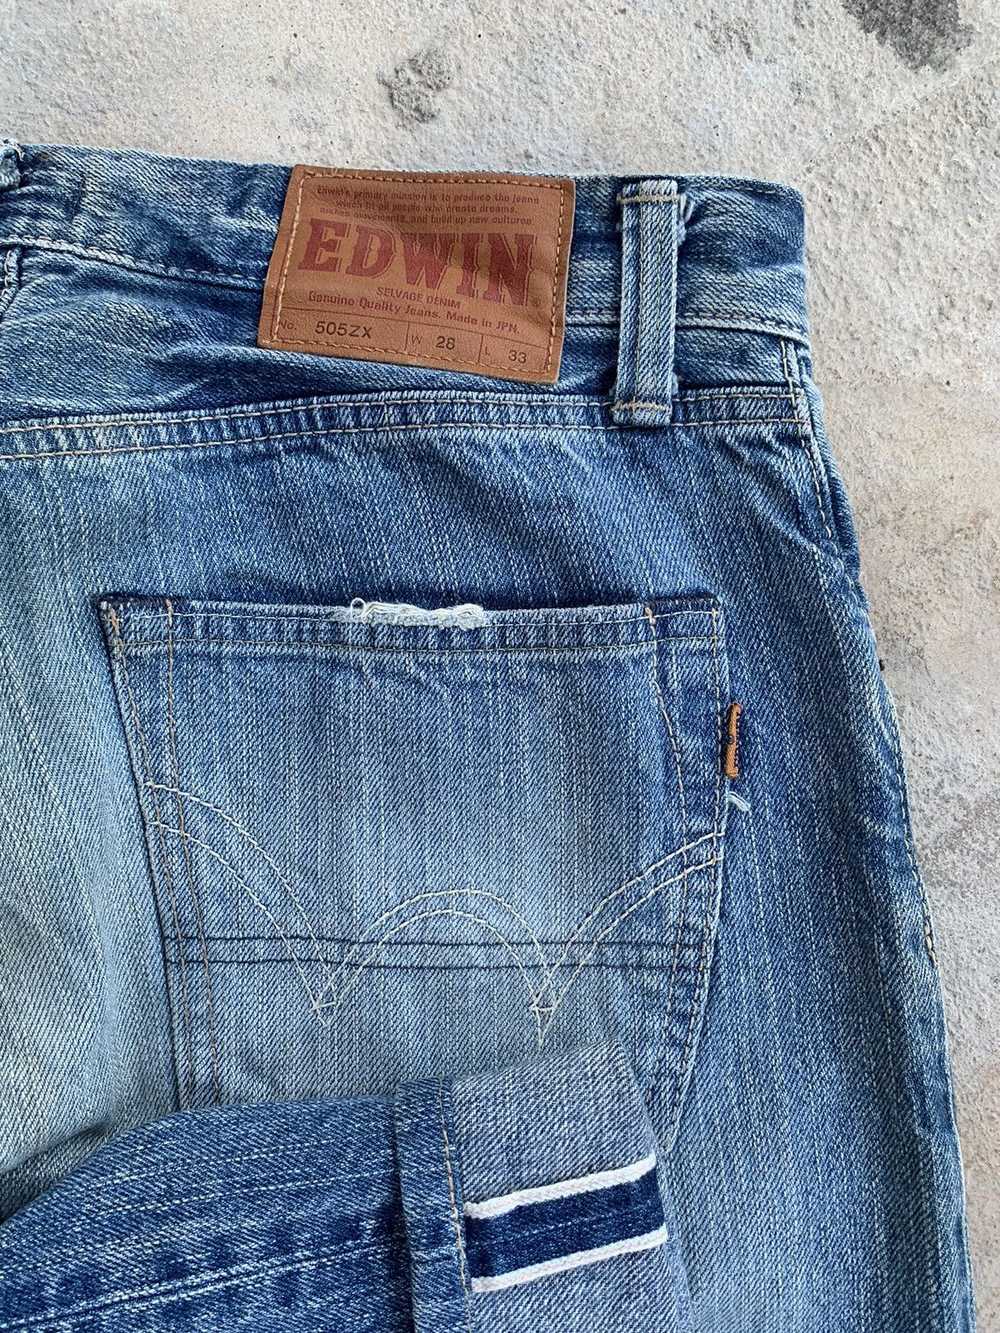 Distressed Denim × Edwin × Vintage Edwin 505ZX Se… - image 3